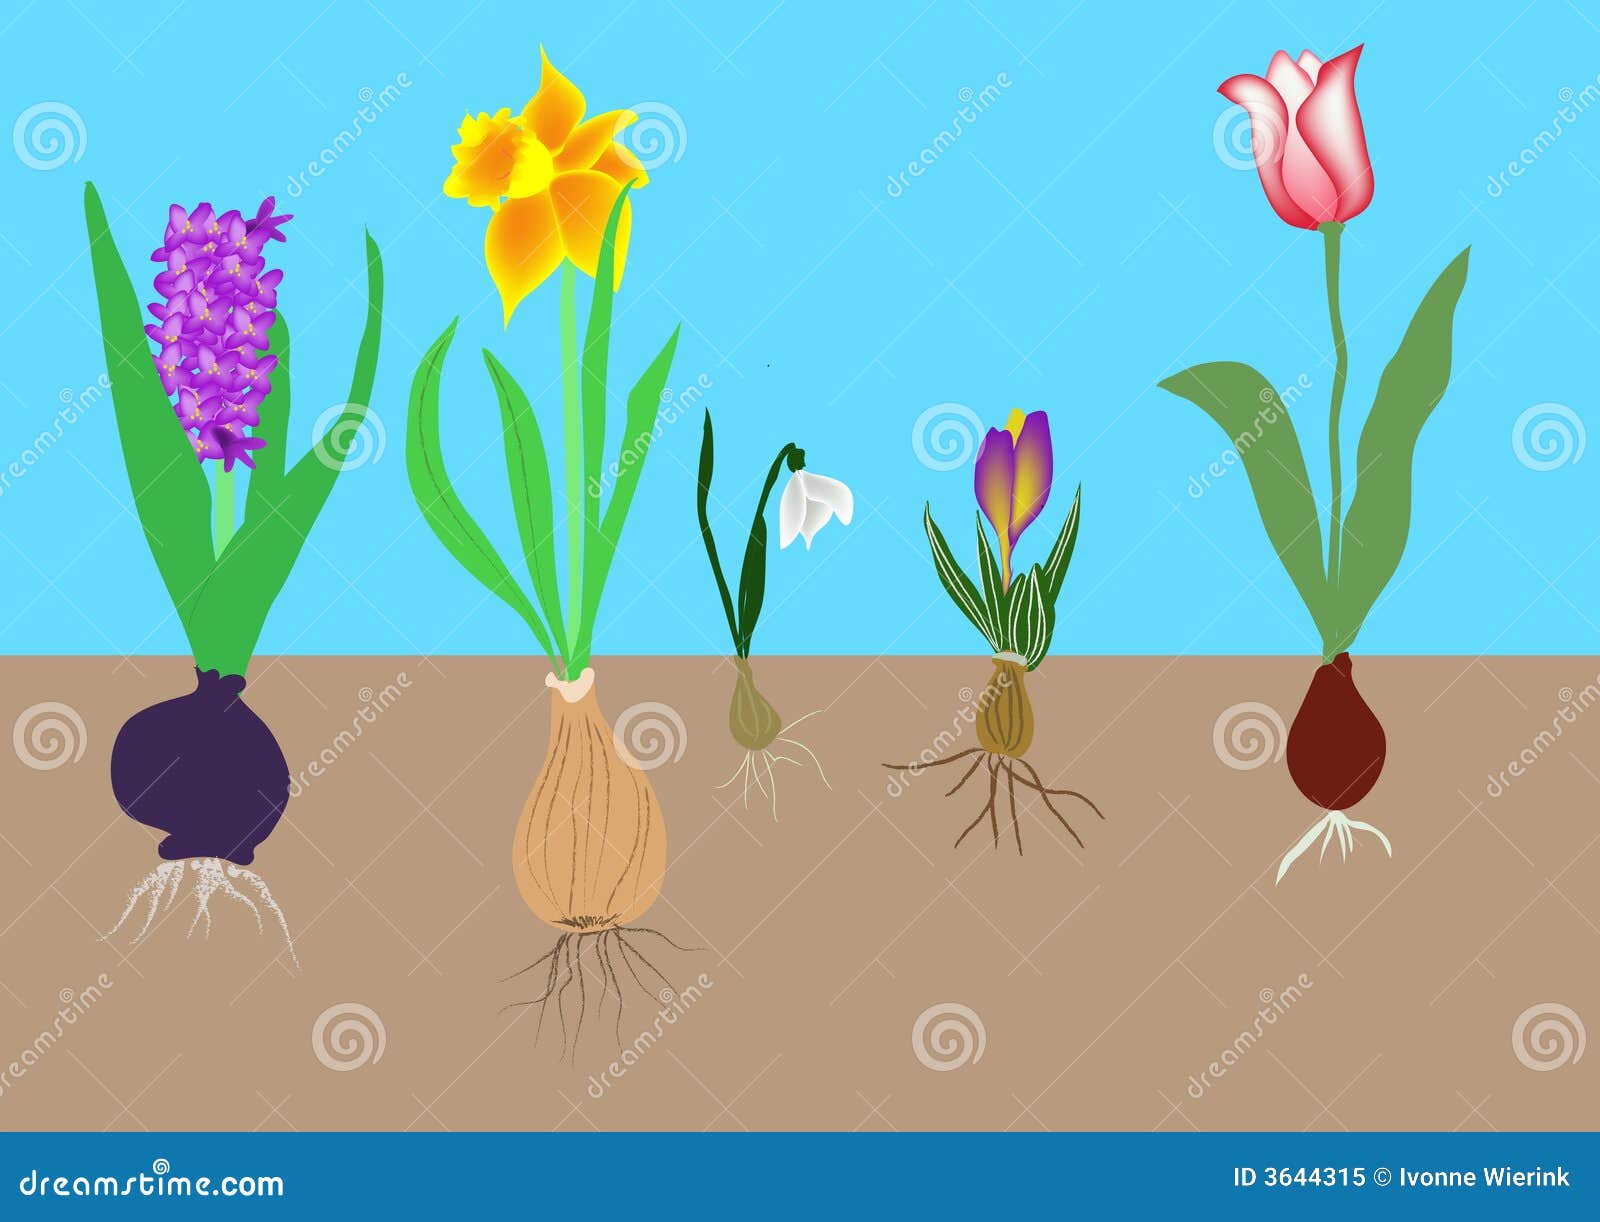 Тюльпан корневище. Луковица тюльпана с детками. Корень тюльпана. Тюльпан растение с луковицей. Луковица тюльпана.